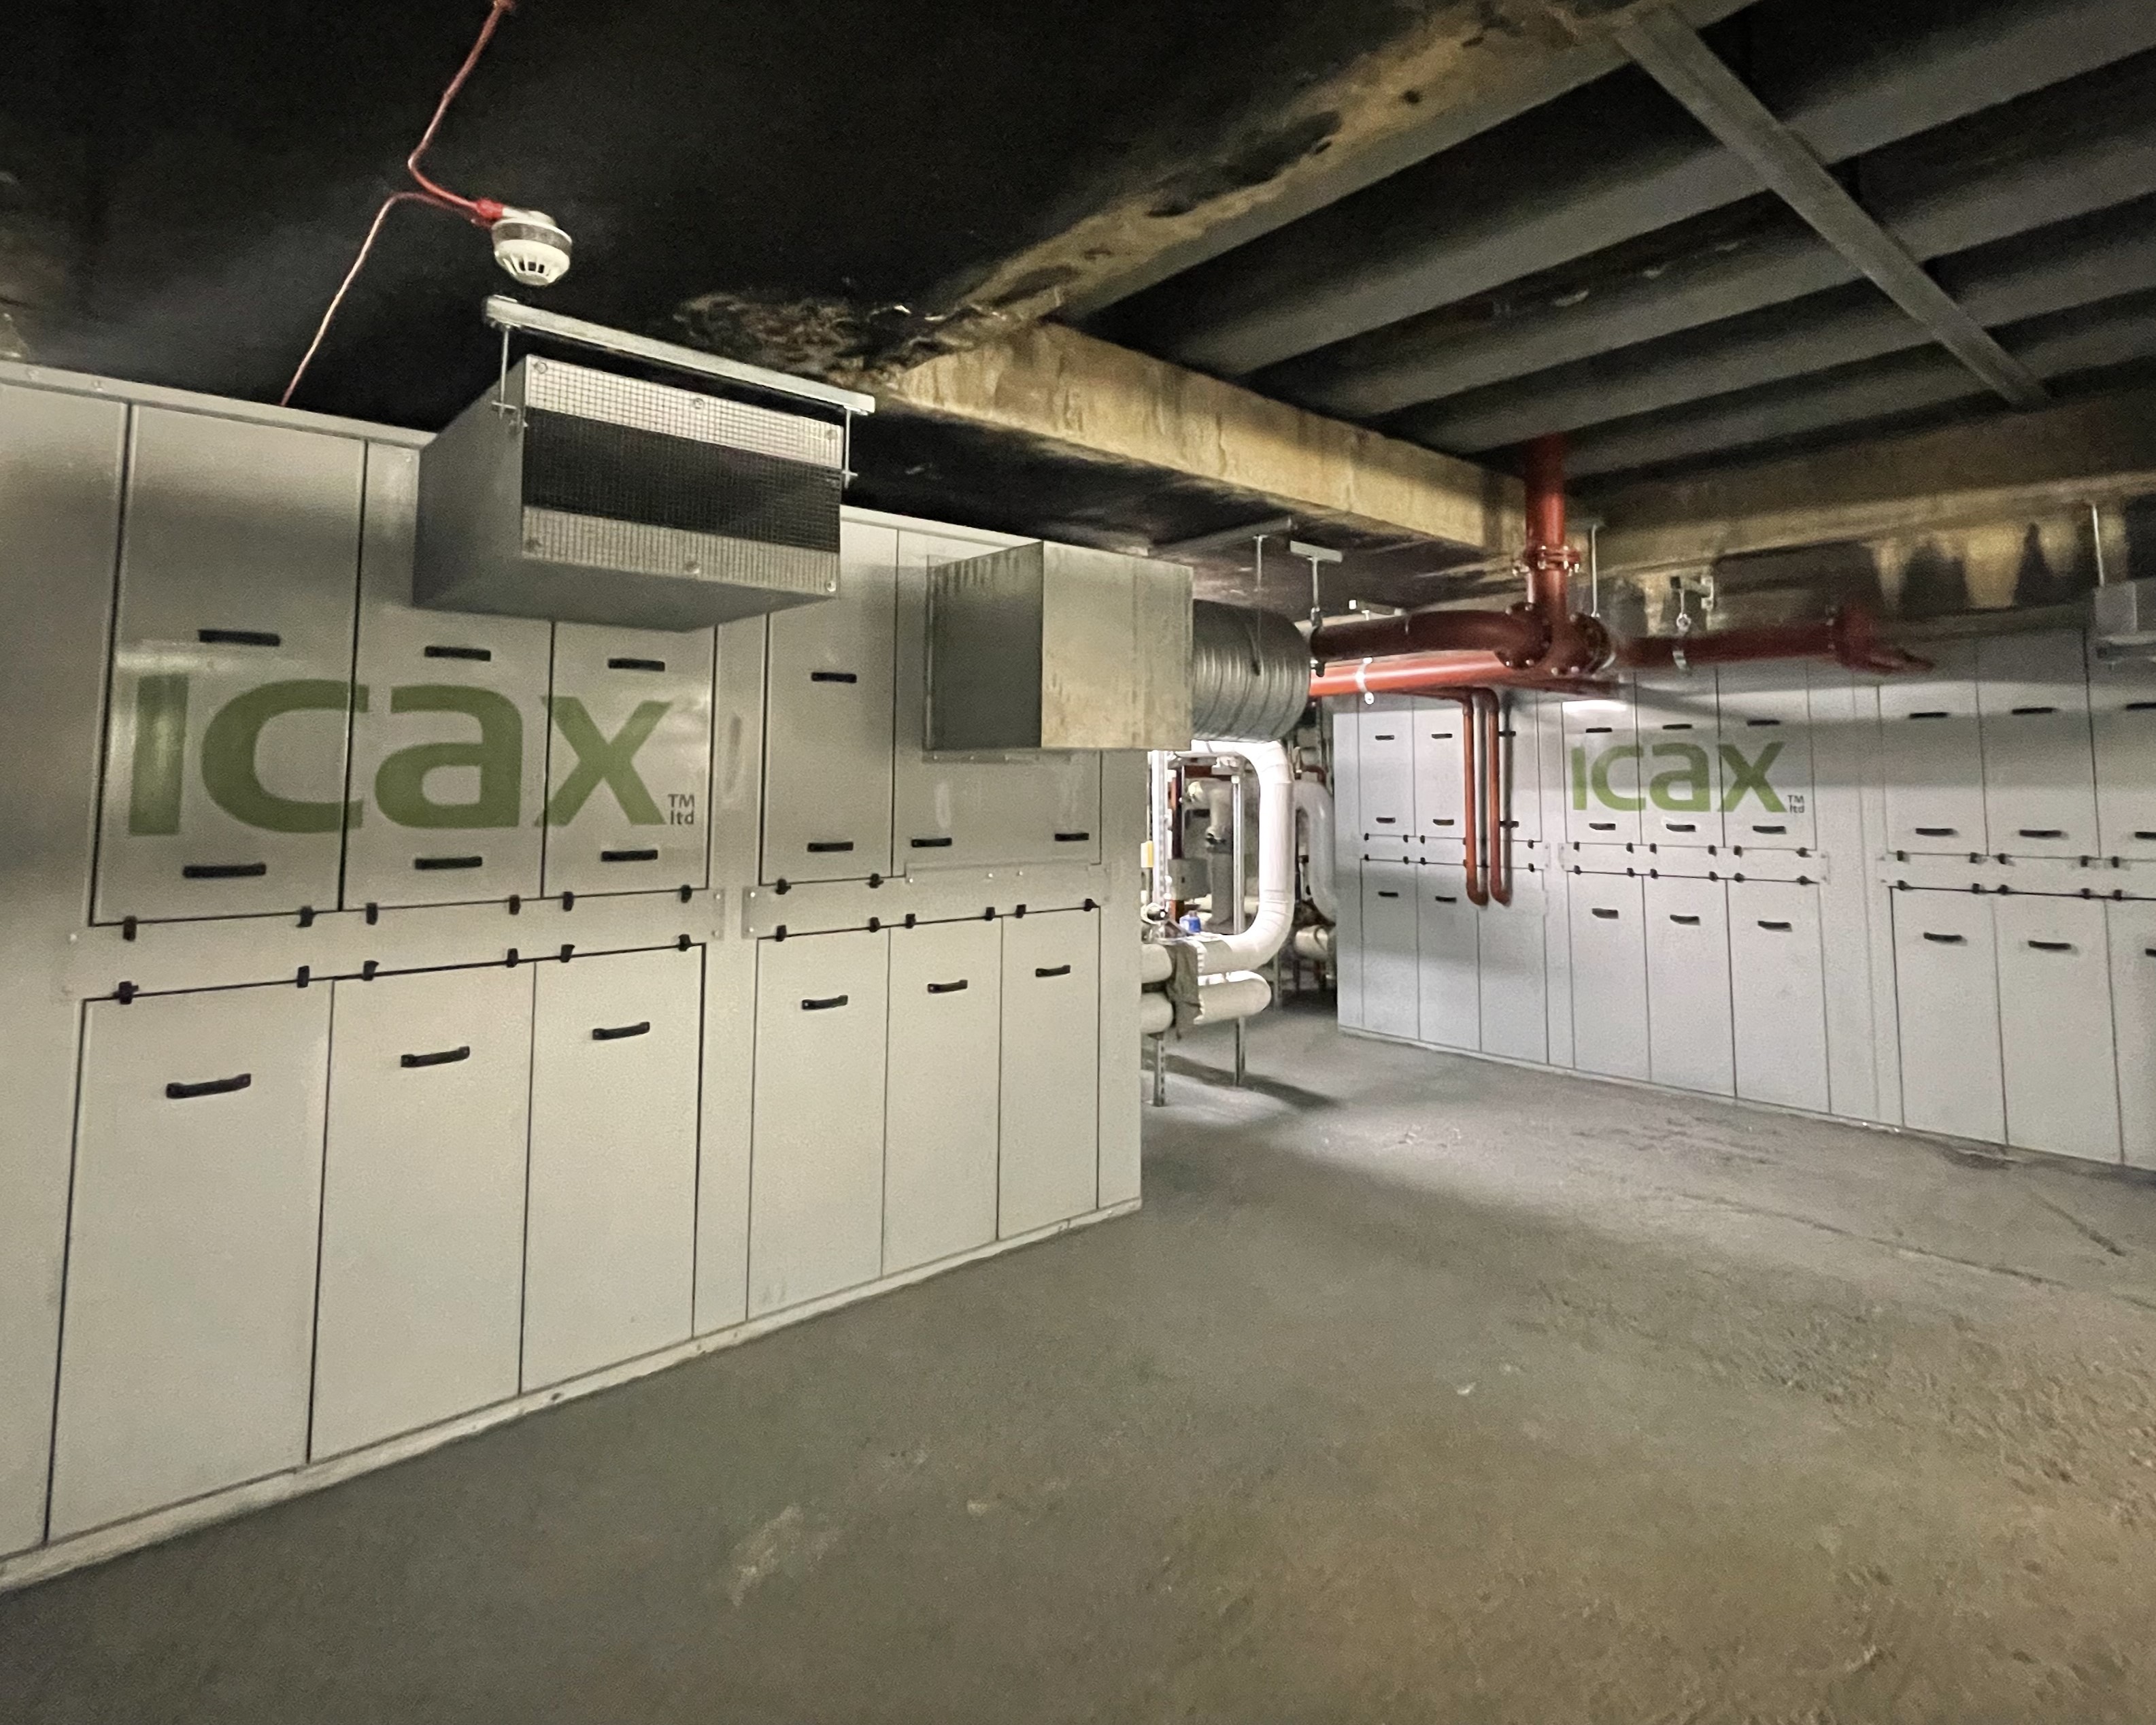 ICAX Heat Pump Southwark